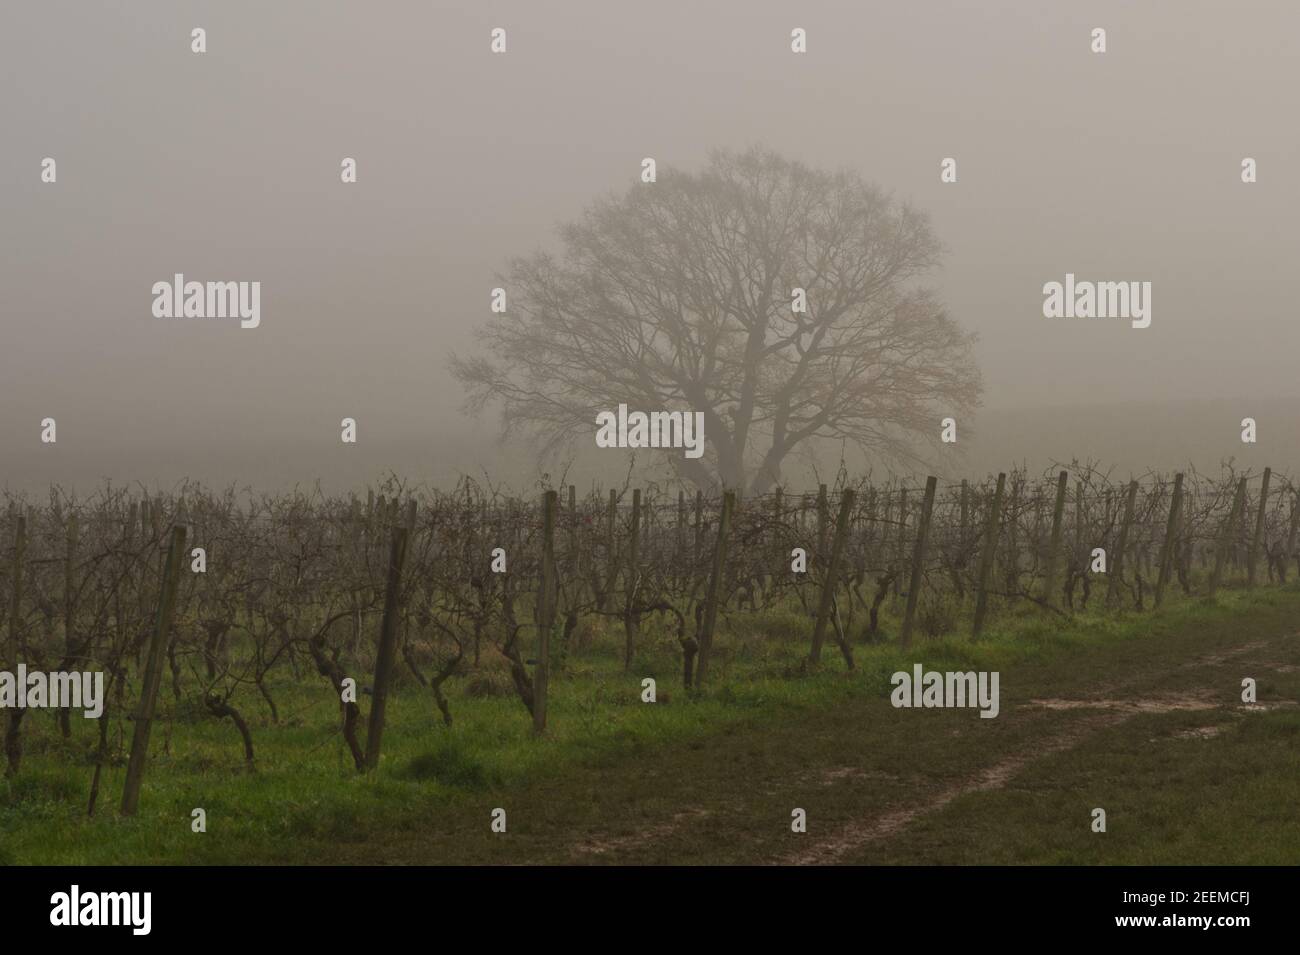 Vineyard near Dorking, Surrey, England. Misty in wintertime. Stock Photo